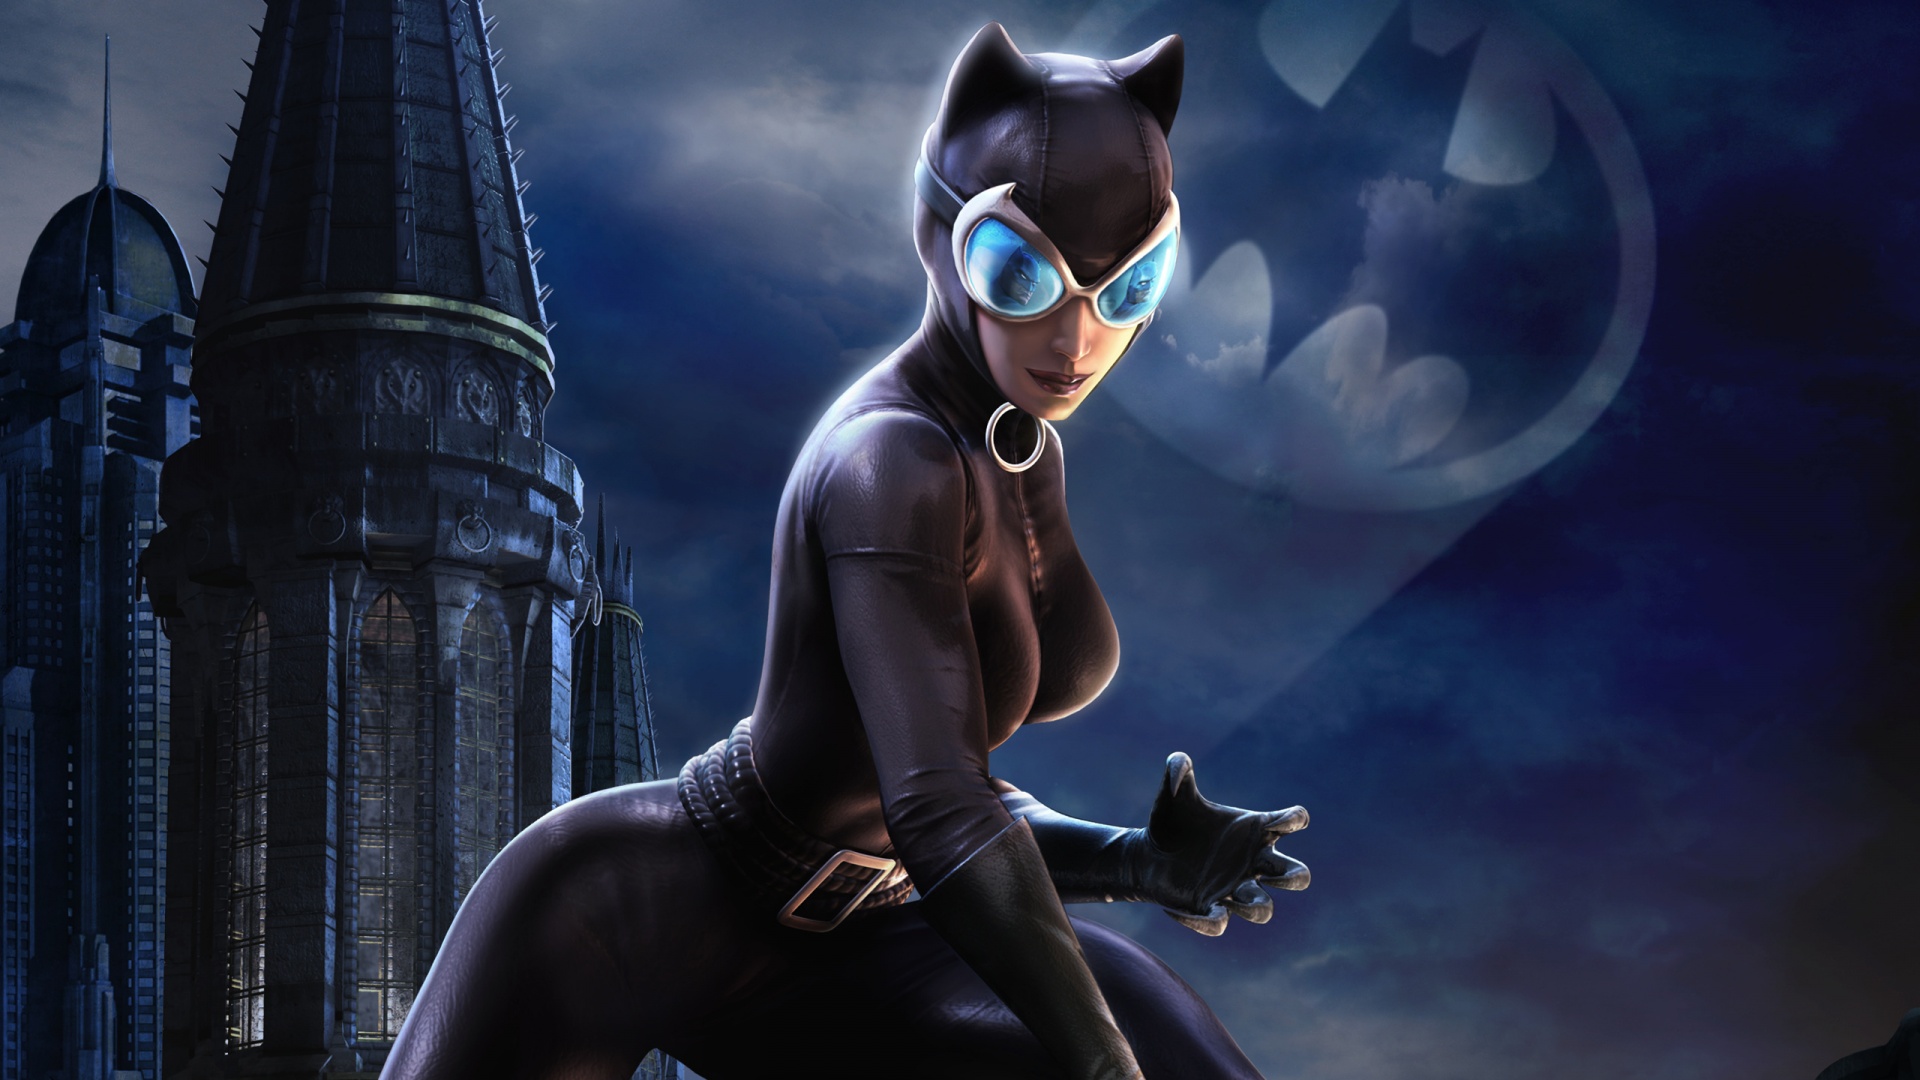 DC Showcase: Catwoman HD wallpapers, Desktop wallpaper - most viewed